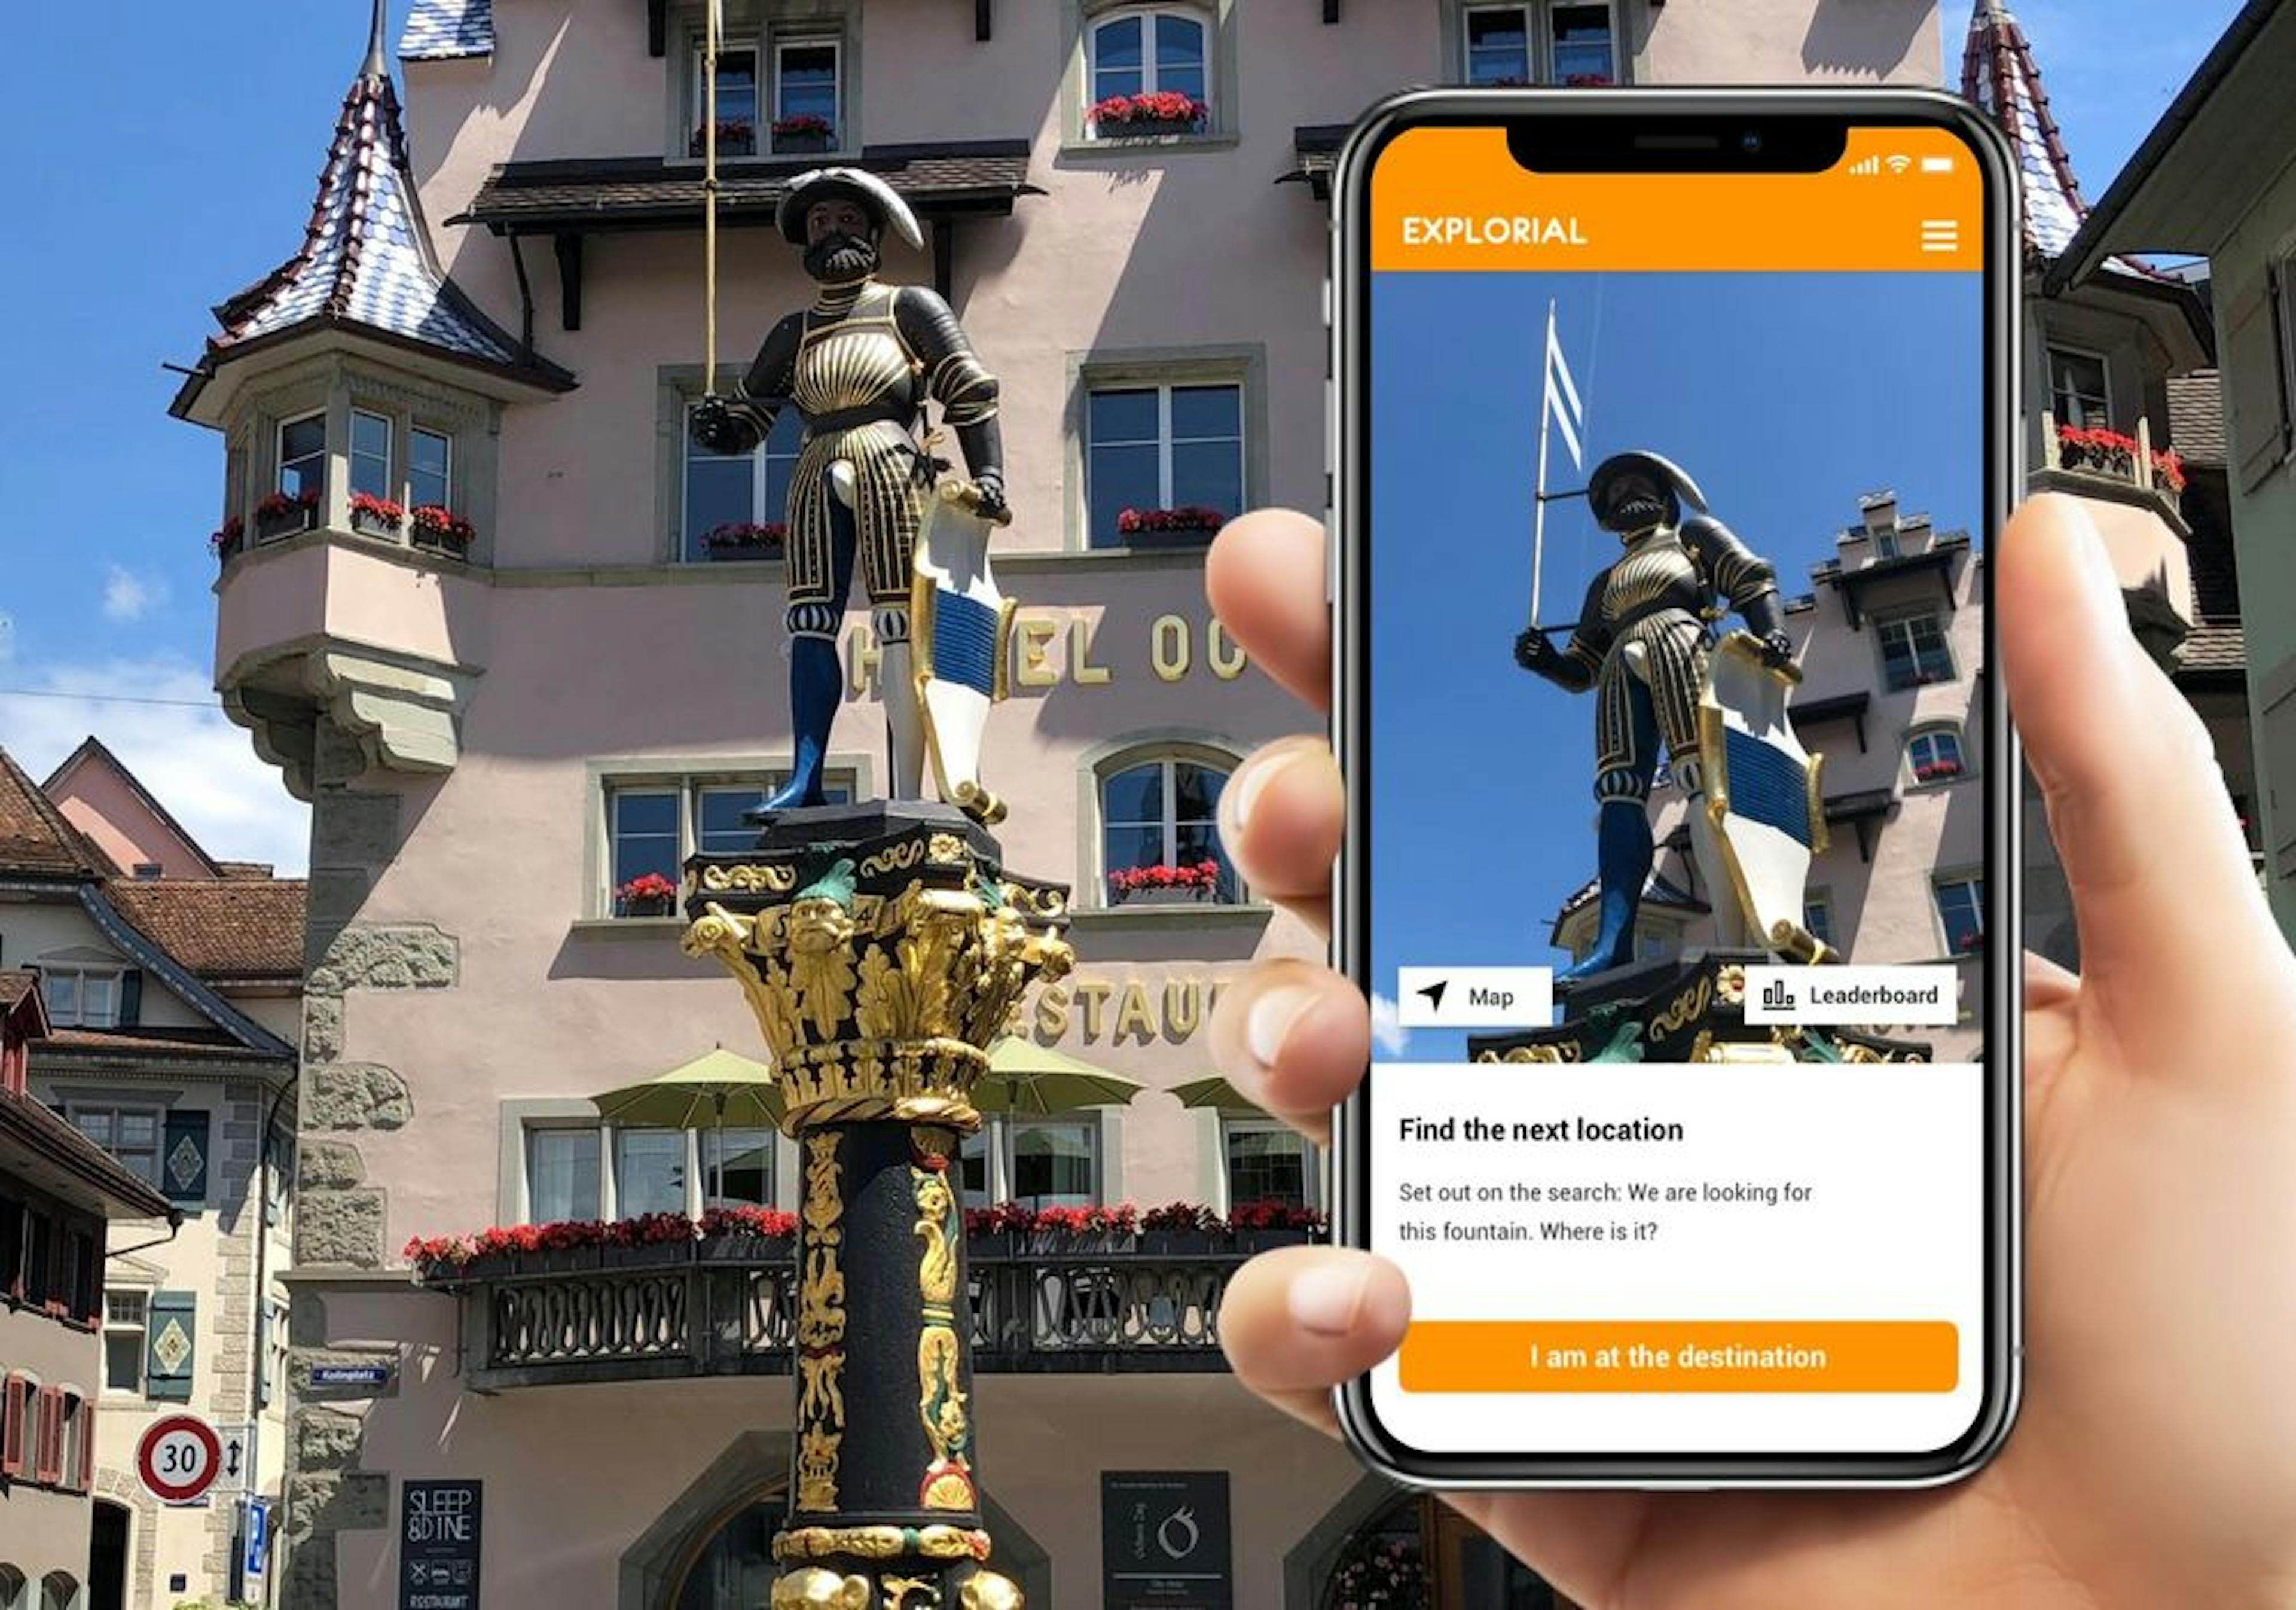 Schnitzeljagd Smartphone Ritter Statue